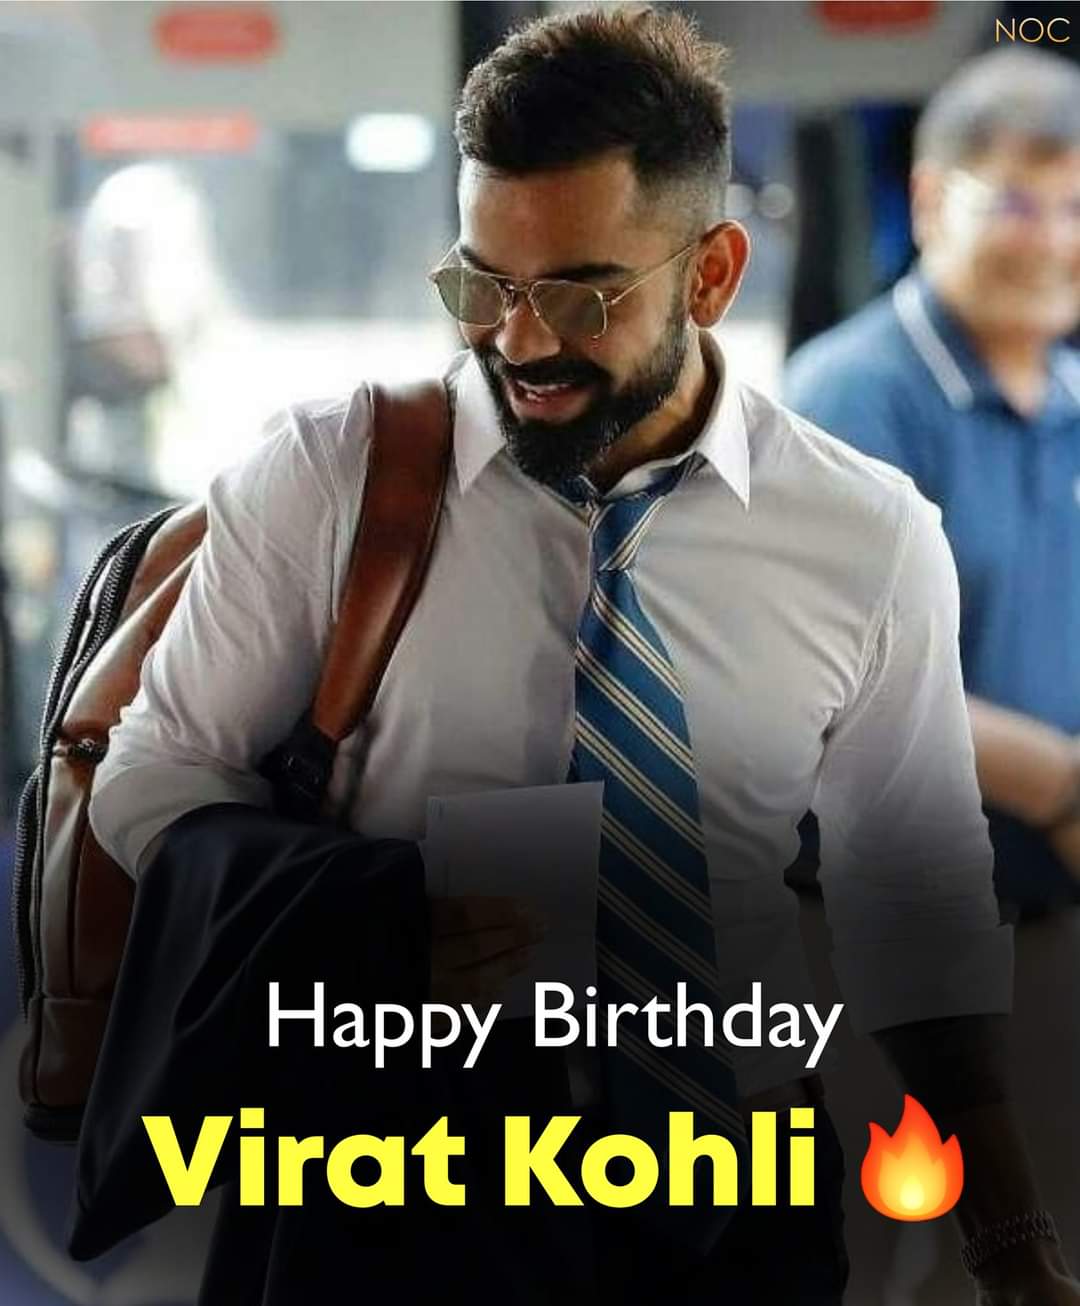 Happy Birthday Virat Kohli 
Wishing you happiness and prosperity!     